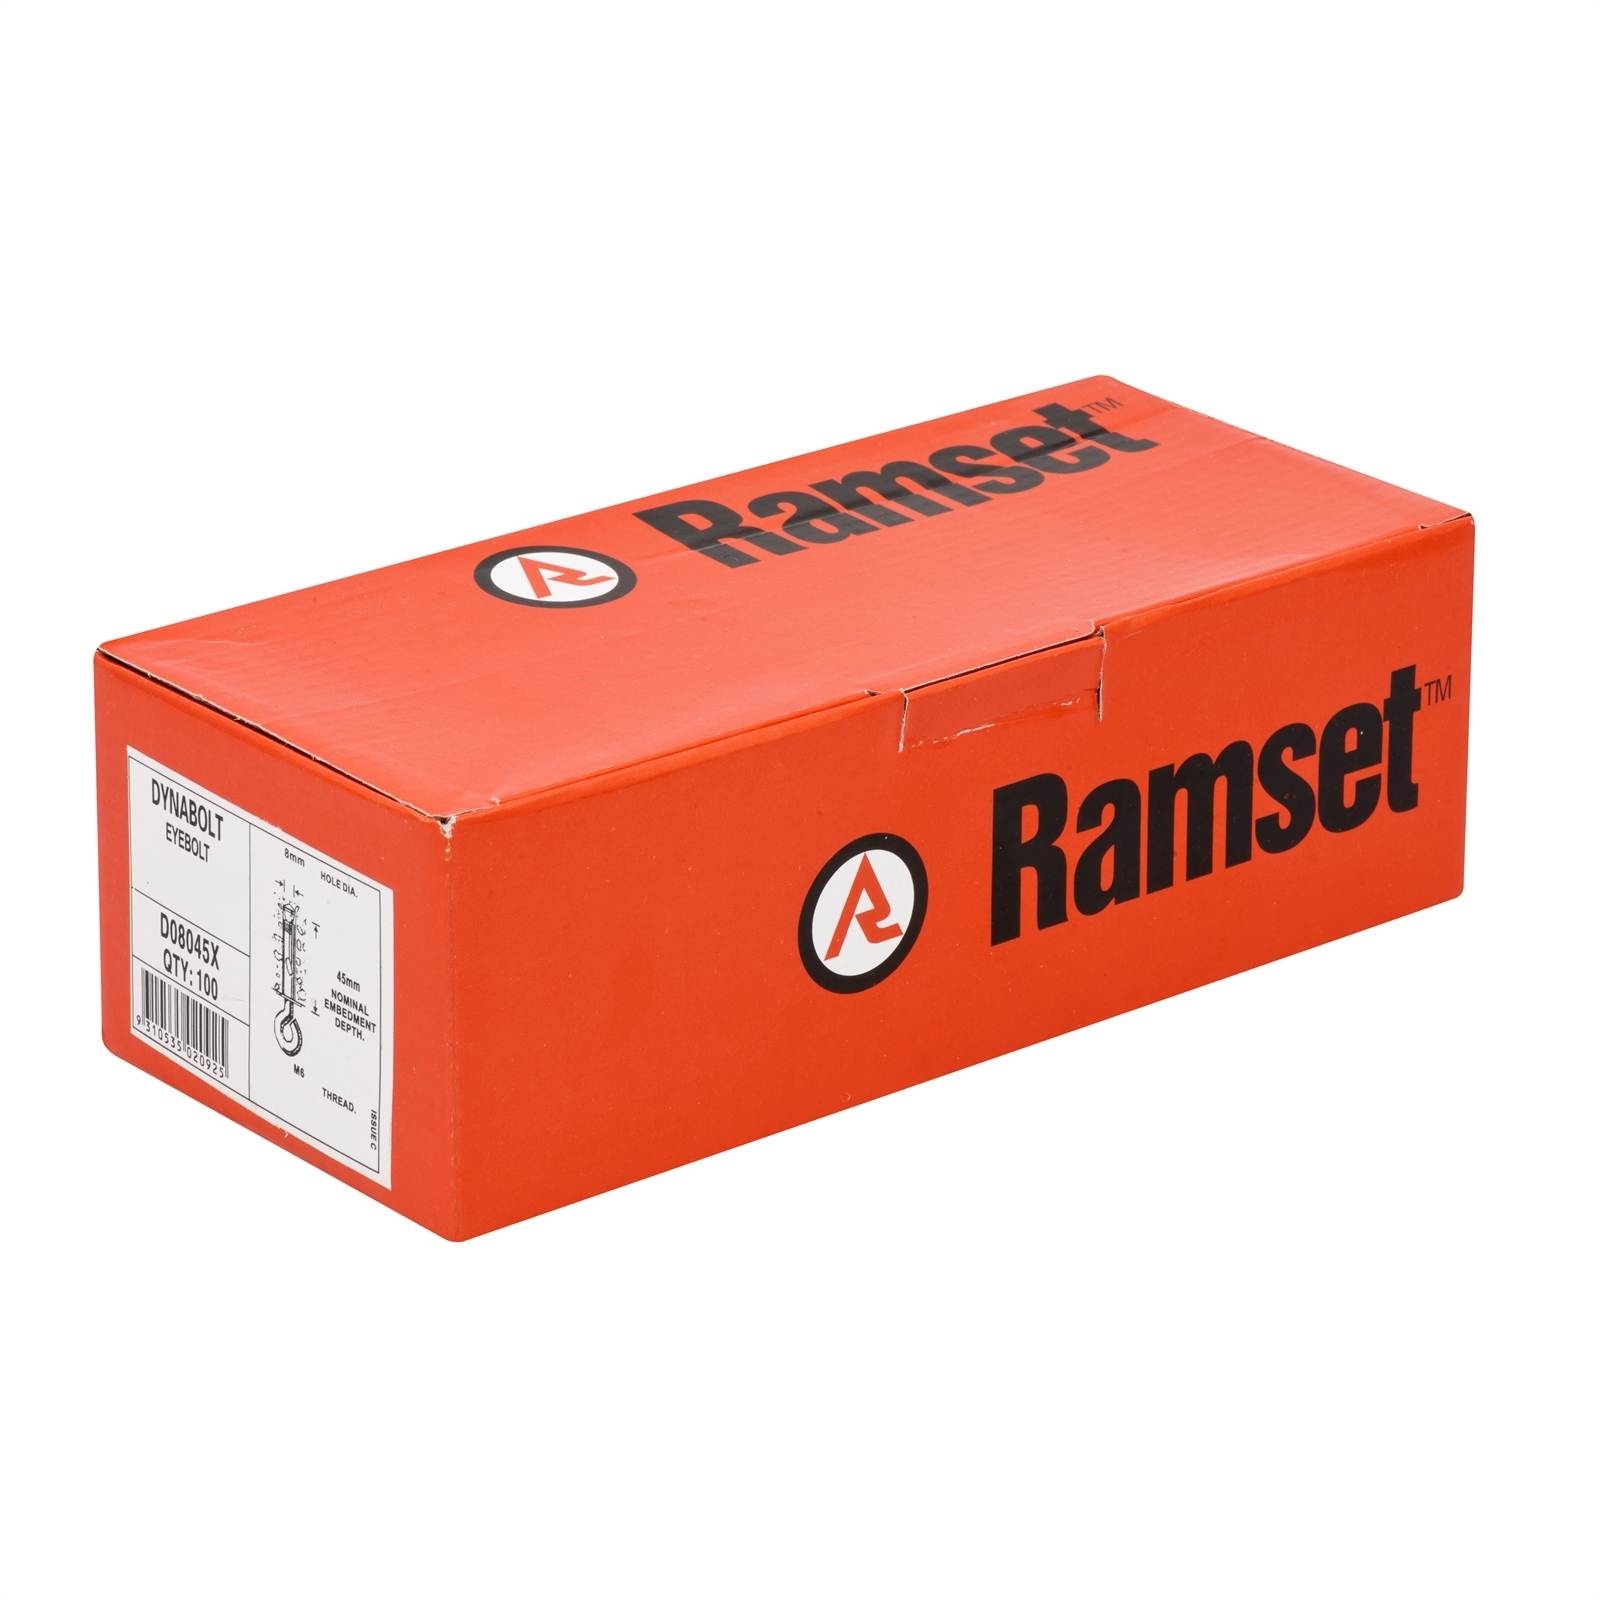 Ramset 8 x 45mm DynaBolt Plus Eye Bolt - 100 Pack